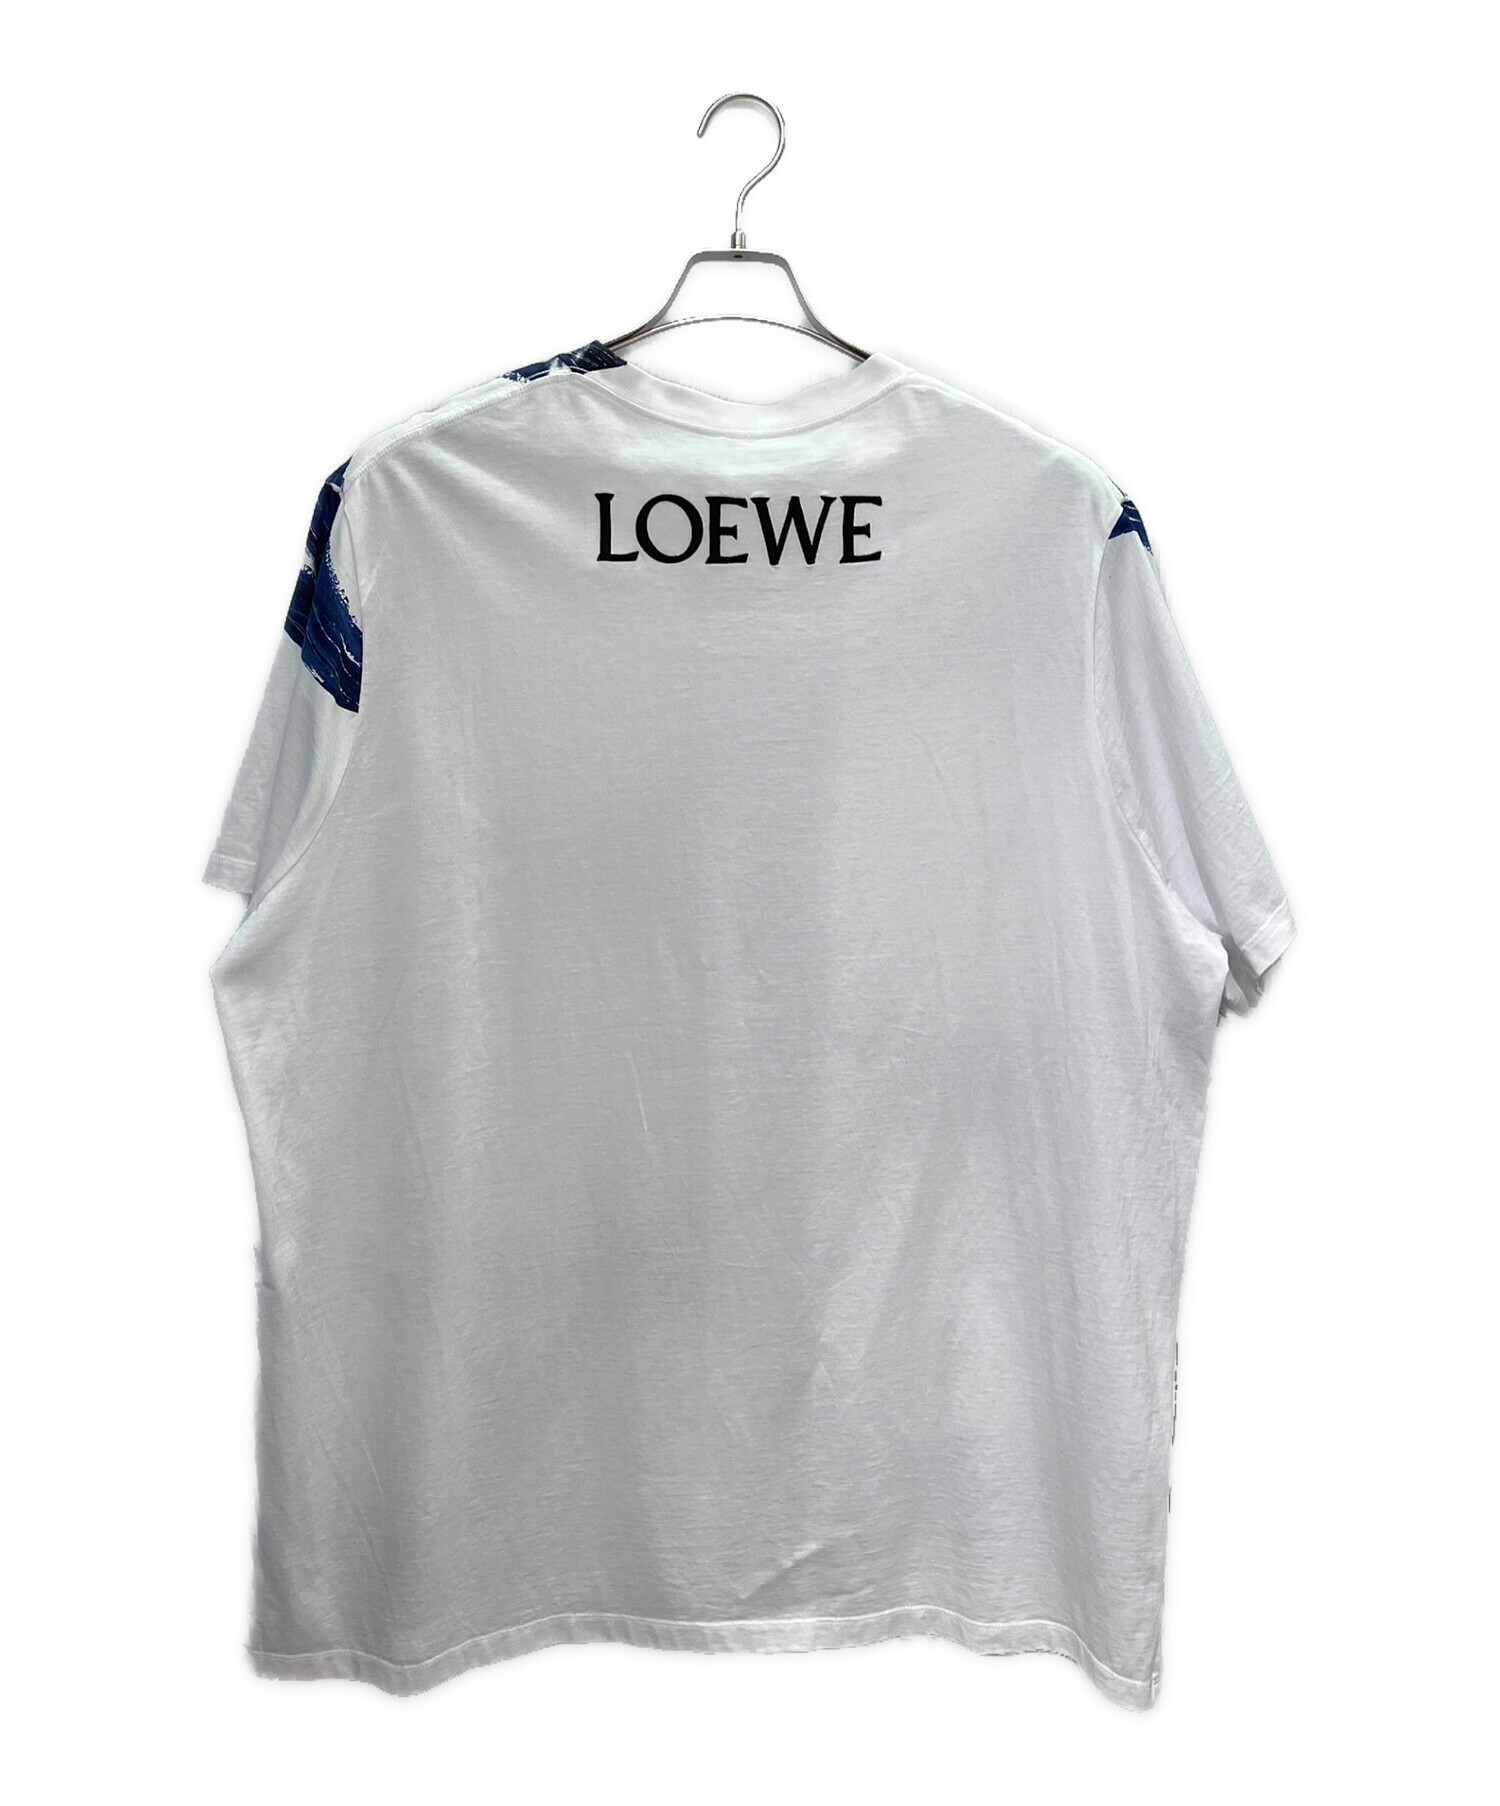 LOEWE (ロエベ) 総柄オーバーサイズTシャツ ホワイト×ブルー サイズ:M